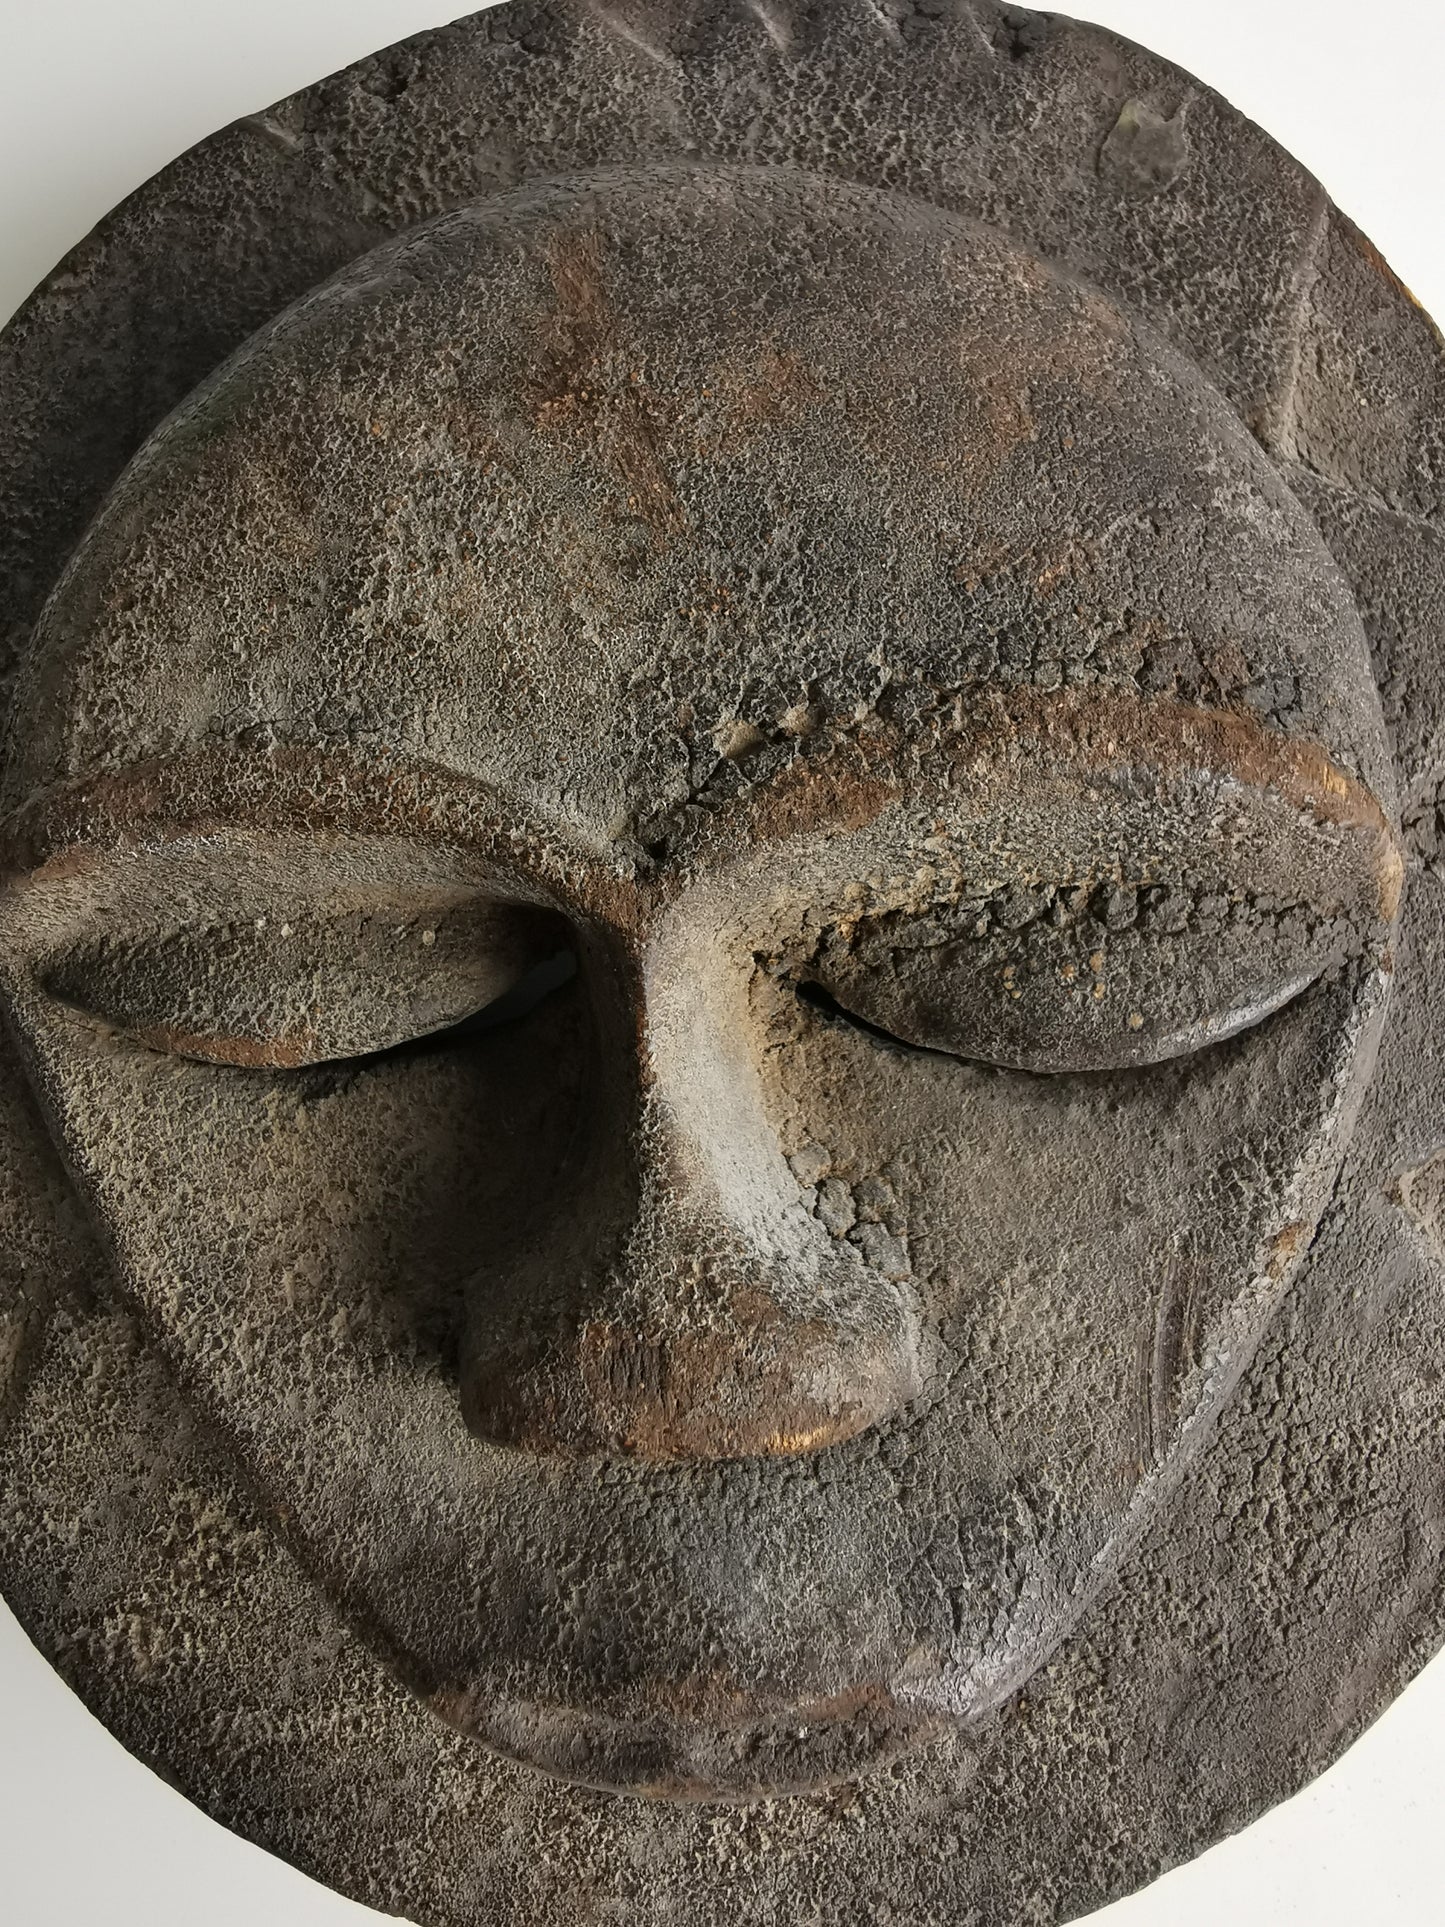 Eket (ibibio people)Sun Moon Mask